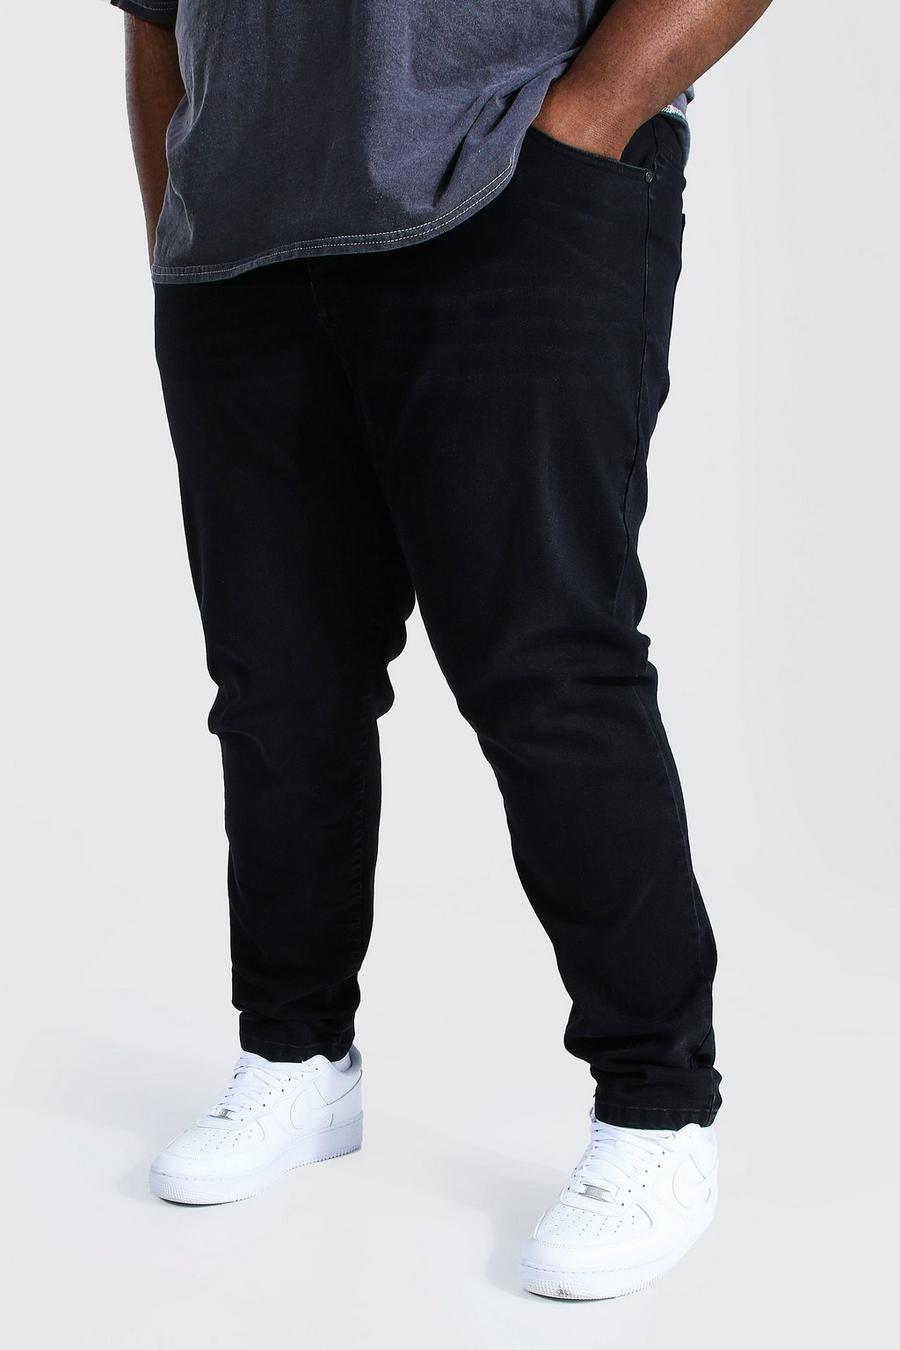 Washed black Plus Size Stretch Skinny Fit Jean